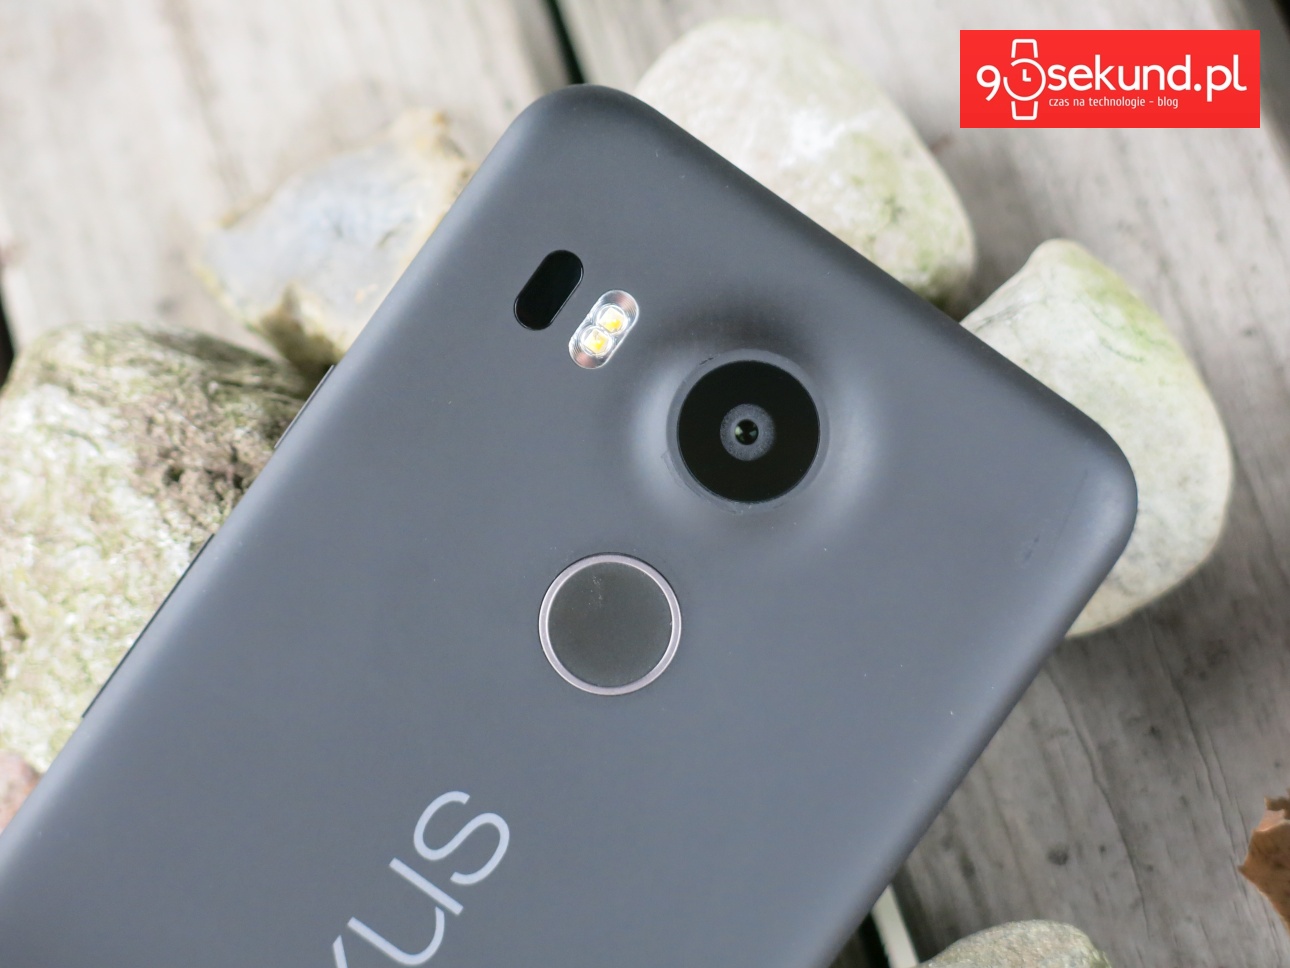 Test i recenzja LG Nexus 5X (LGH791) - aparat i skaner linii papilarnych - 90sekund.pl